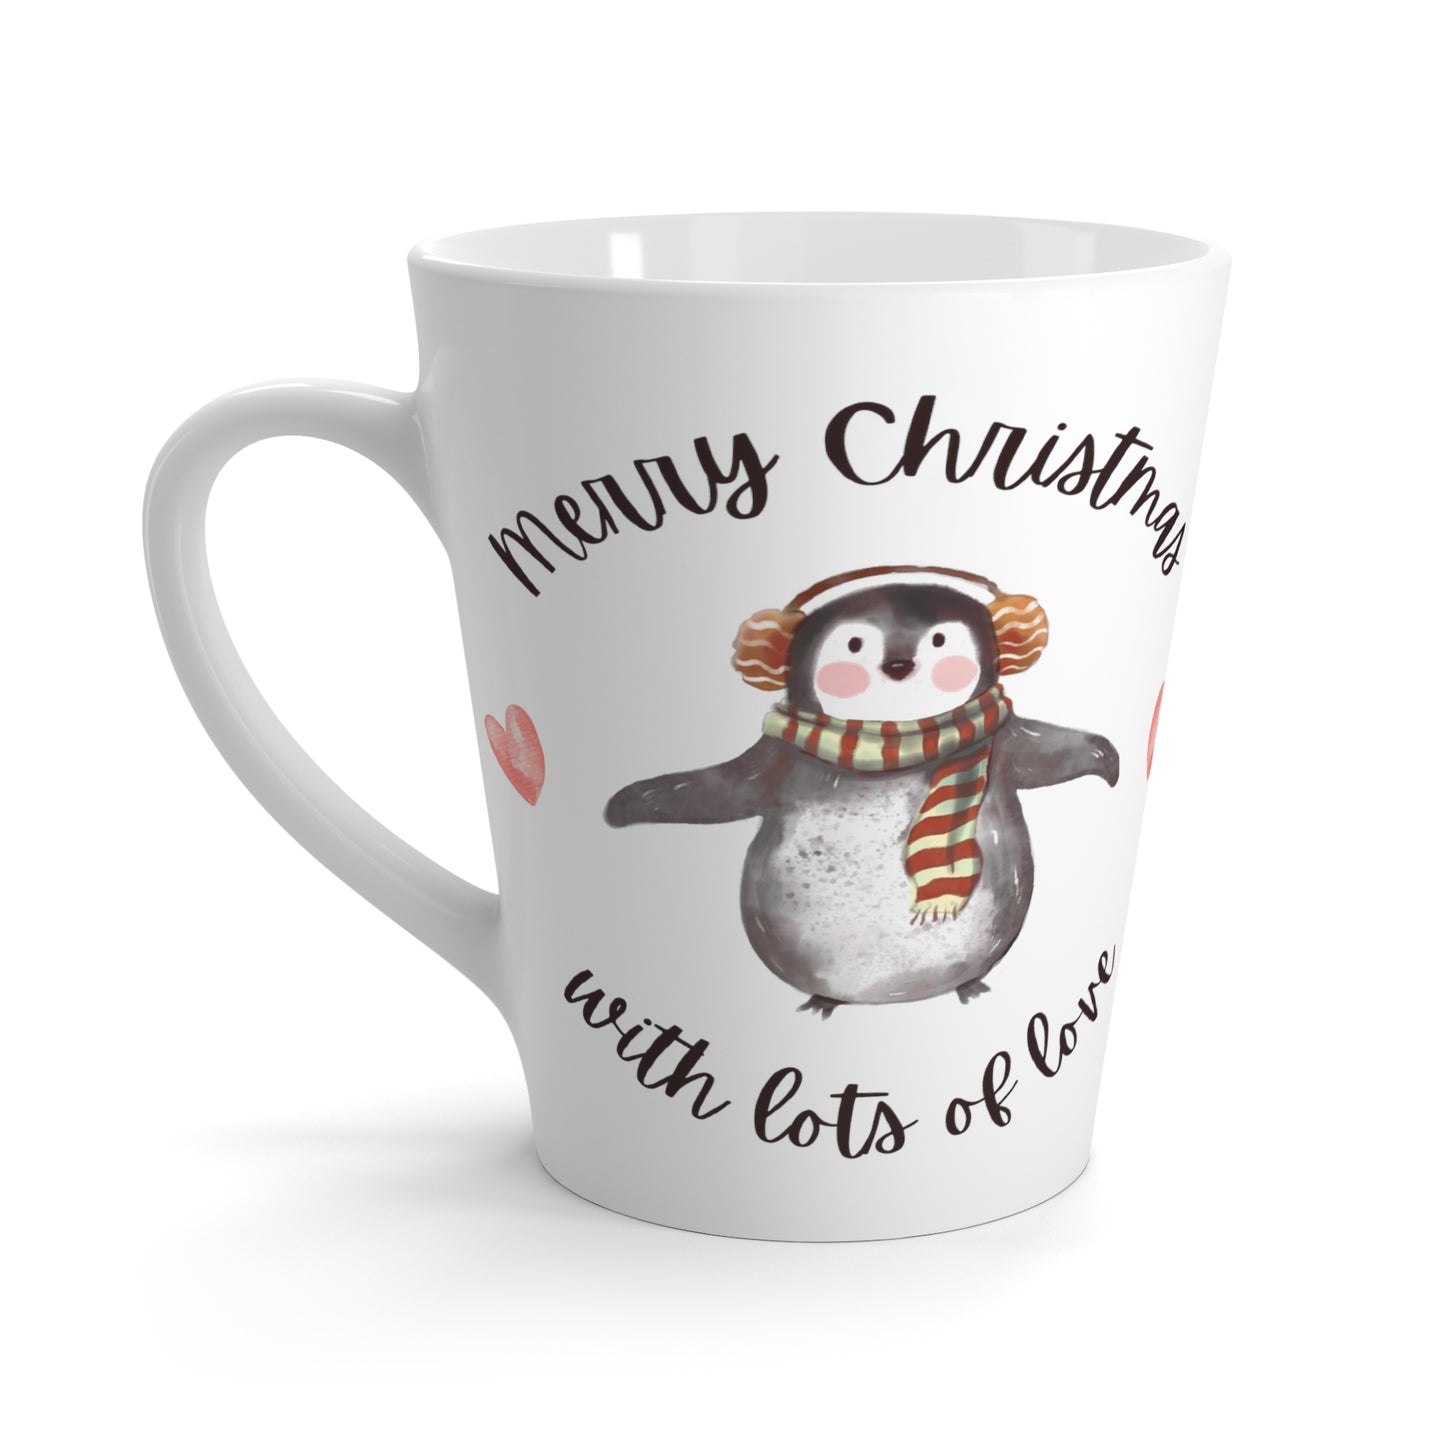 Merry Christmas with Lots of Love Printed Latte Mug, 12oz